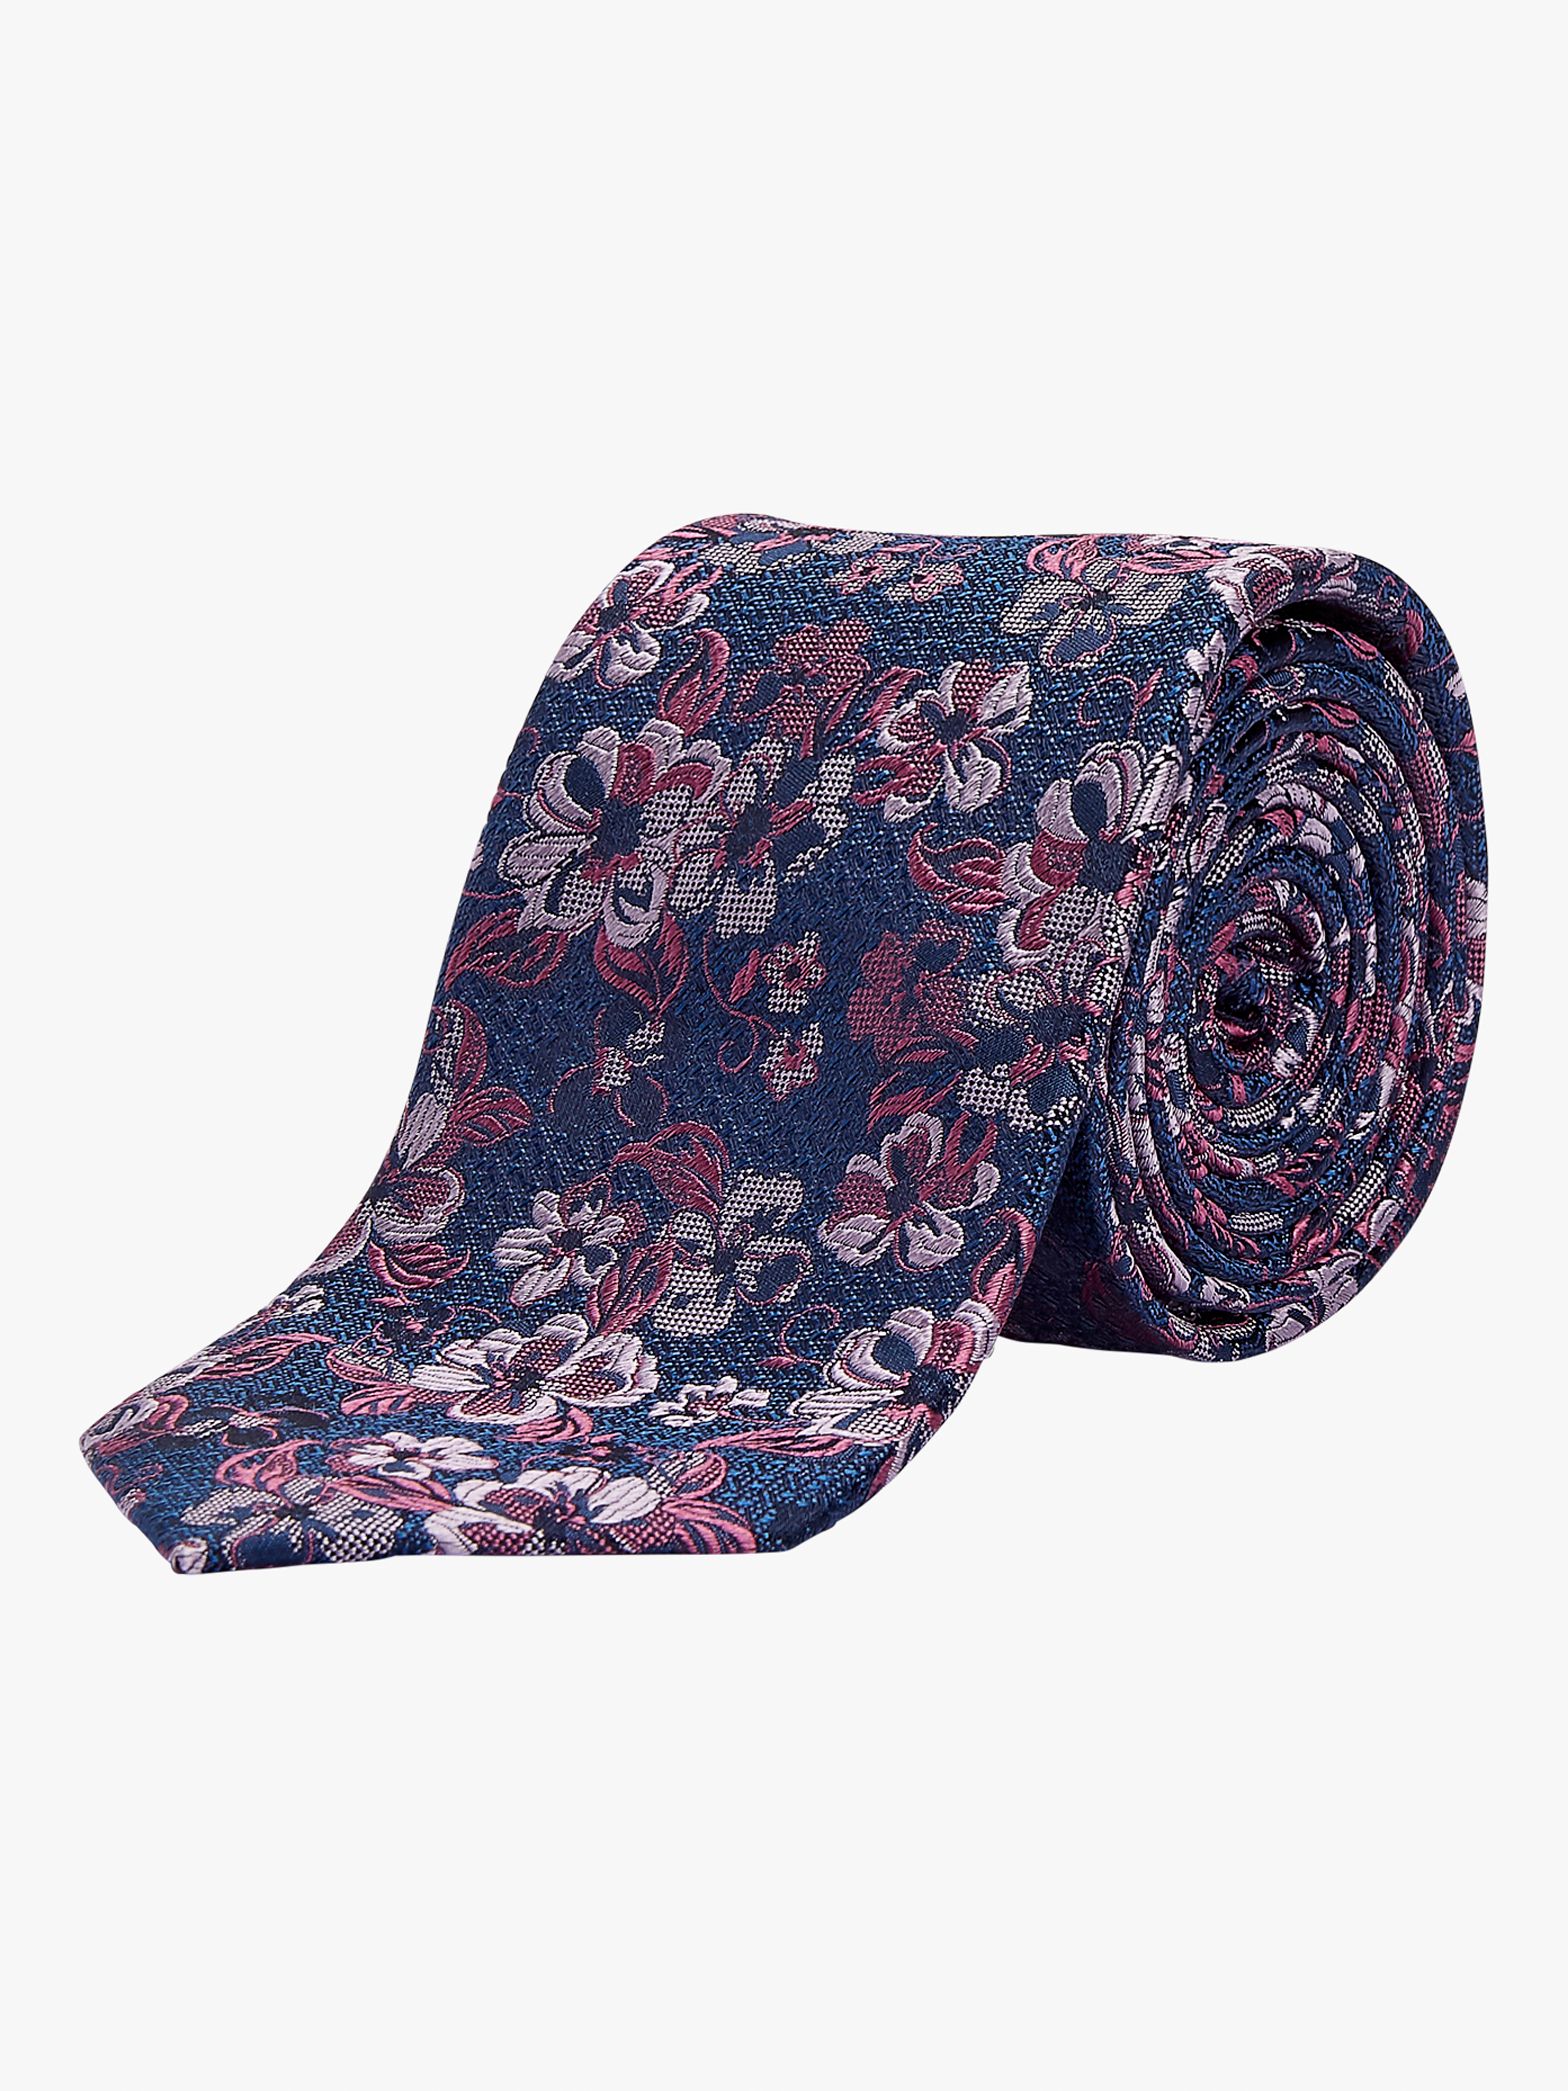 Richard James Mayfair Floral Silk Tie, Multi